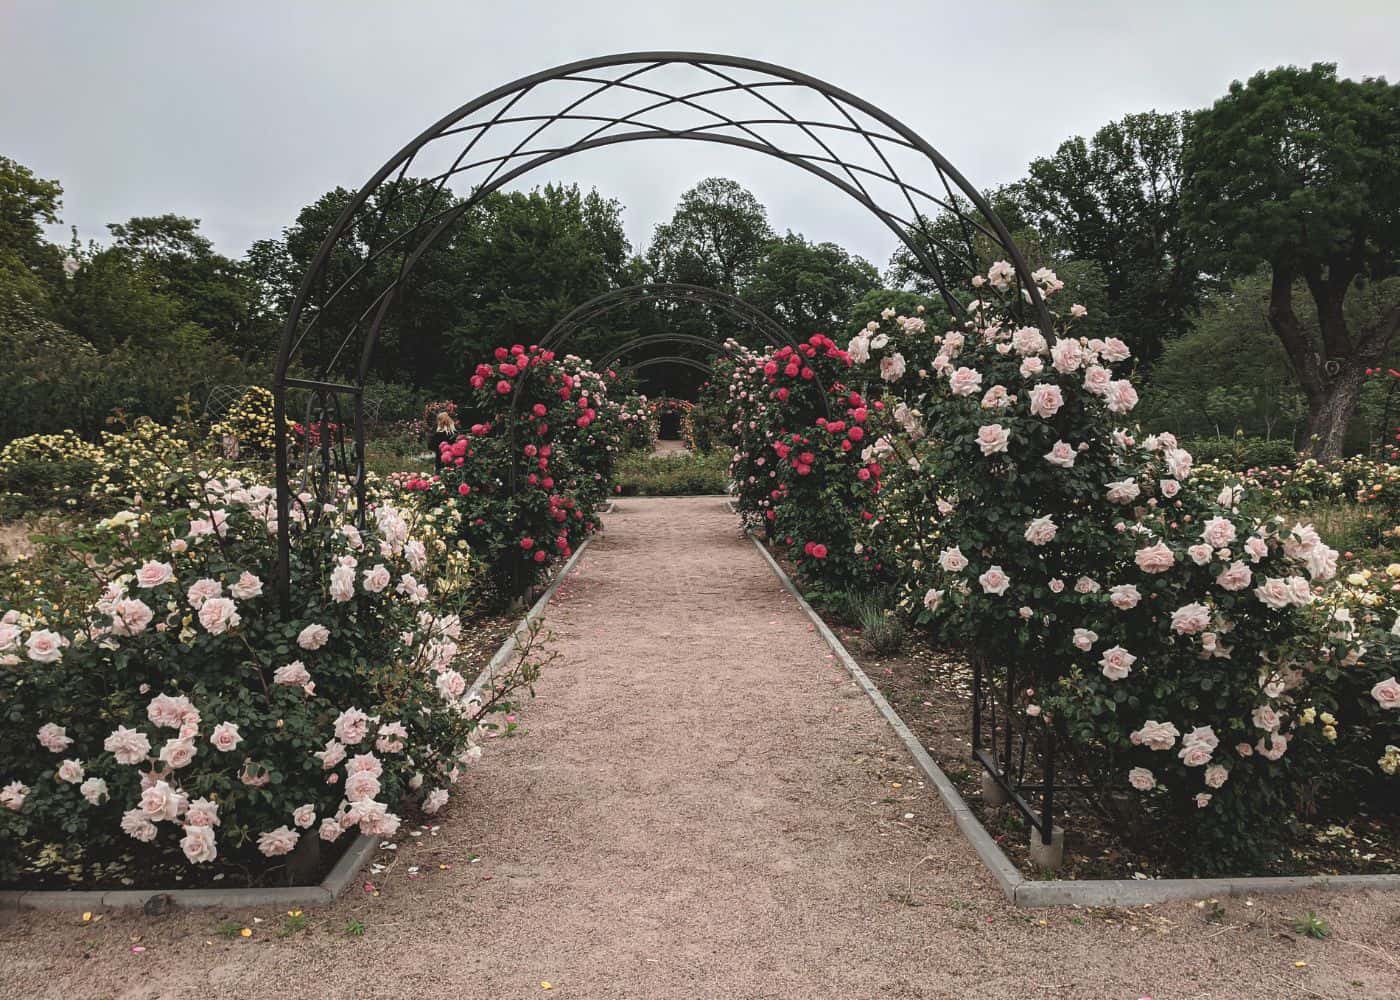 Formal rose garden in development with trellis arches